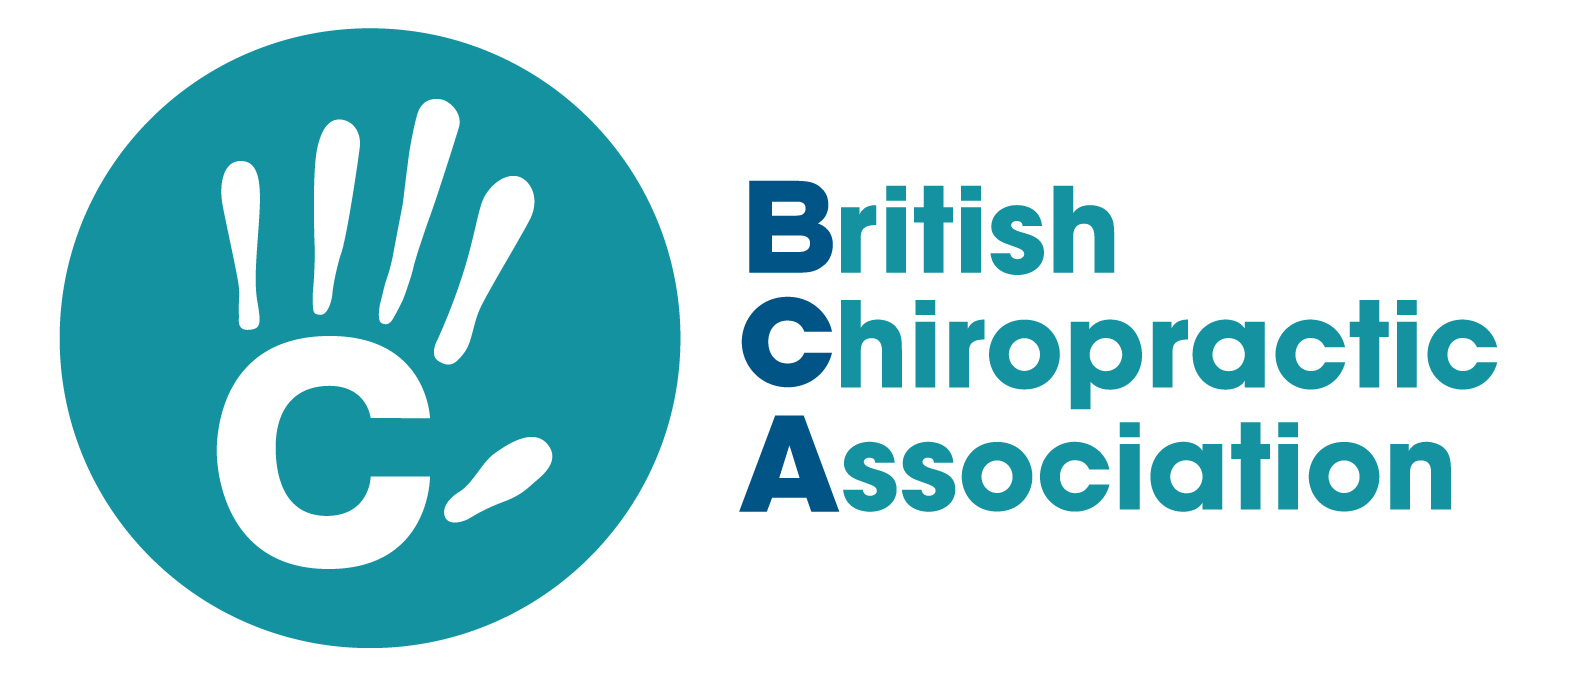 The British Chiropractic Associations begins major strategic repositioning